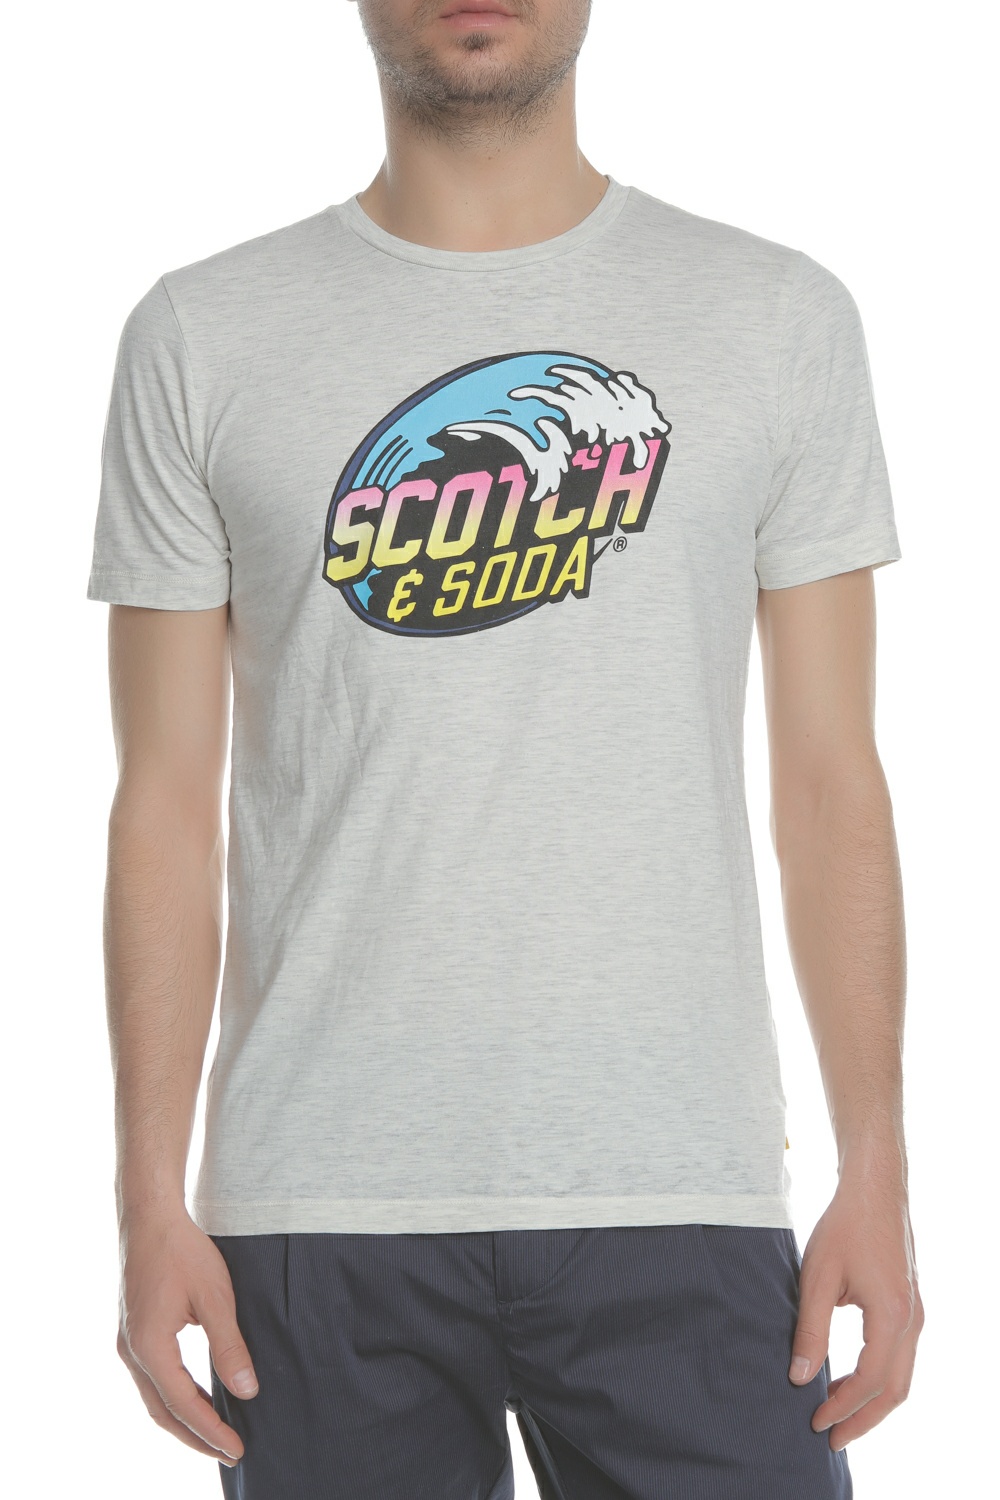 SCOTCH & SODA - Ανδρική μπλούζα Surf-inspired logo artwork tee γκρι-εκρού Ανδρικά/Ρούχα/Μπλούζες/Κοντομάνικες